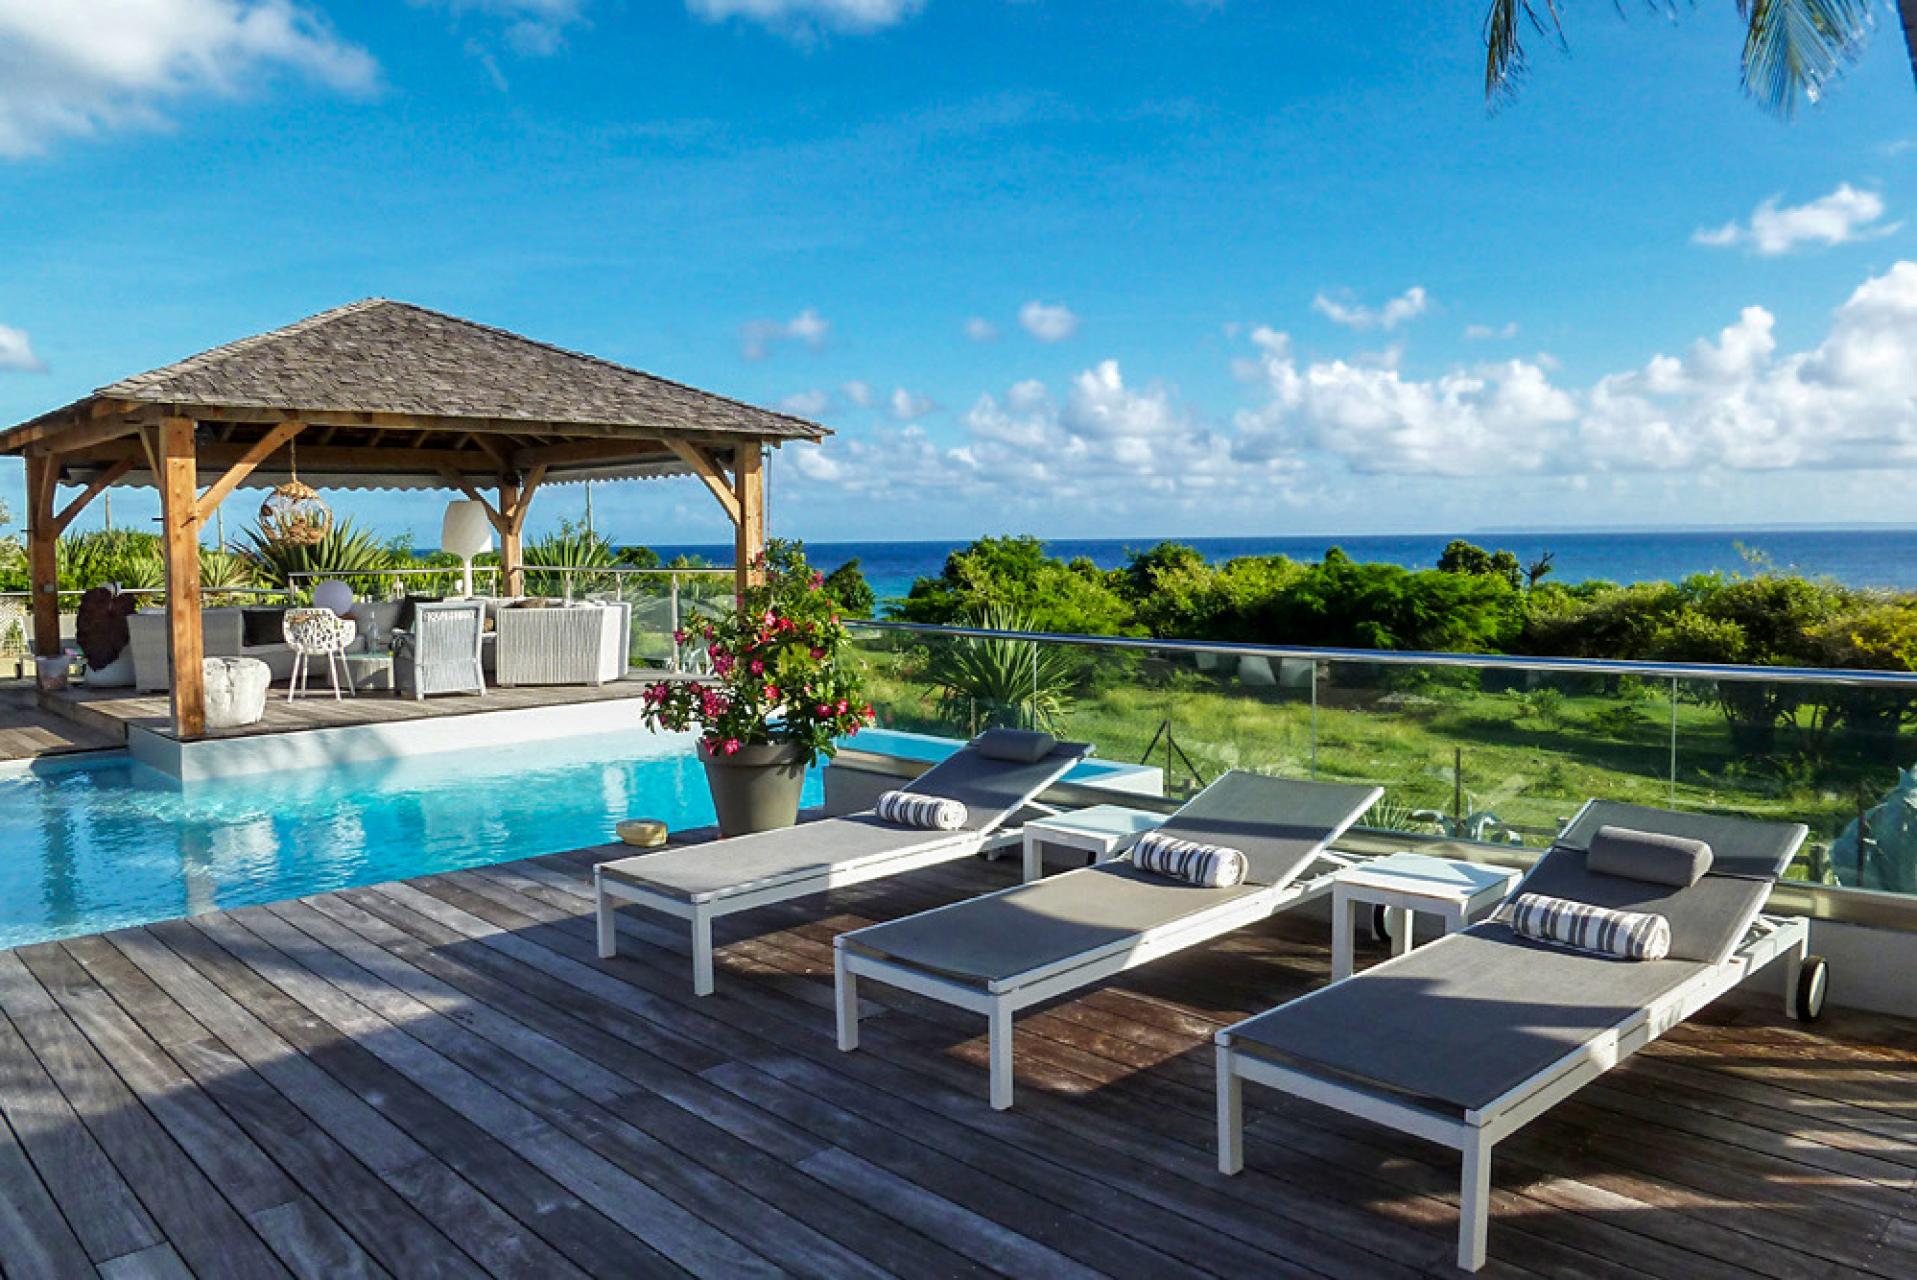 Location villa luxe Guadeloupe - Piscine et Carbet